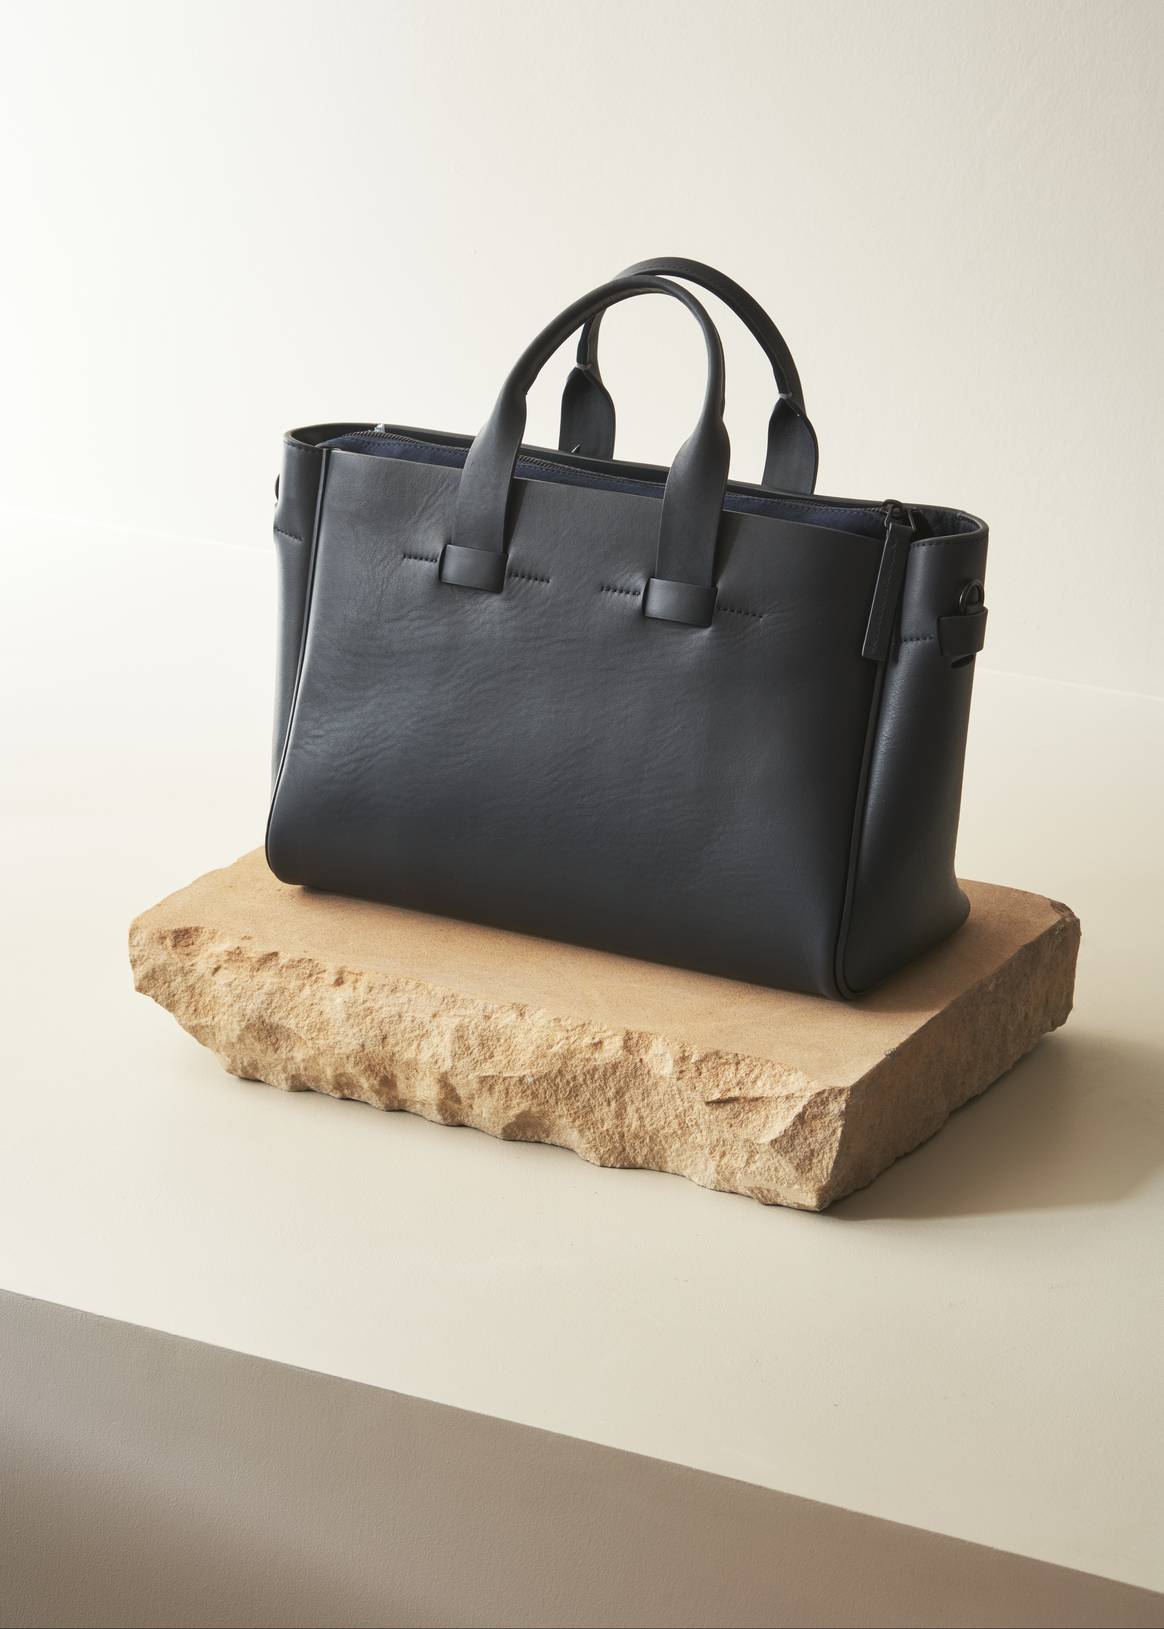 London-based bag brand Troubadour opens Soho flagship